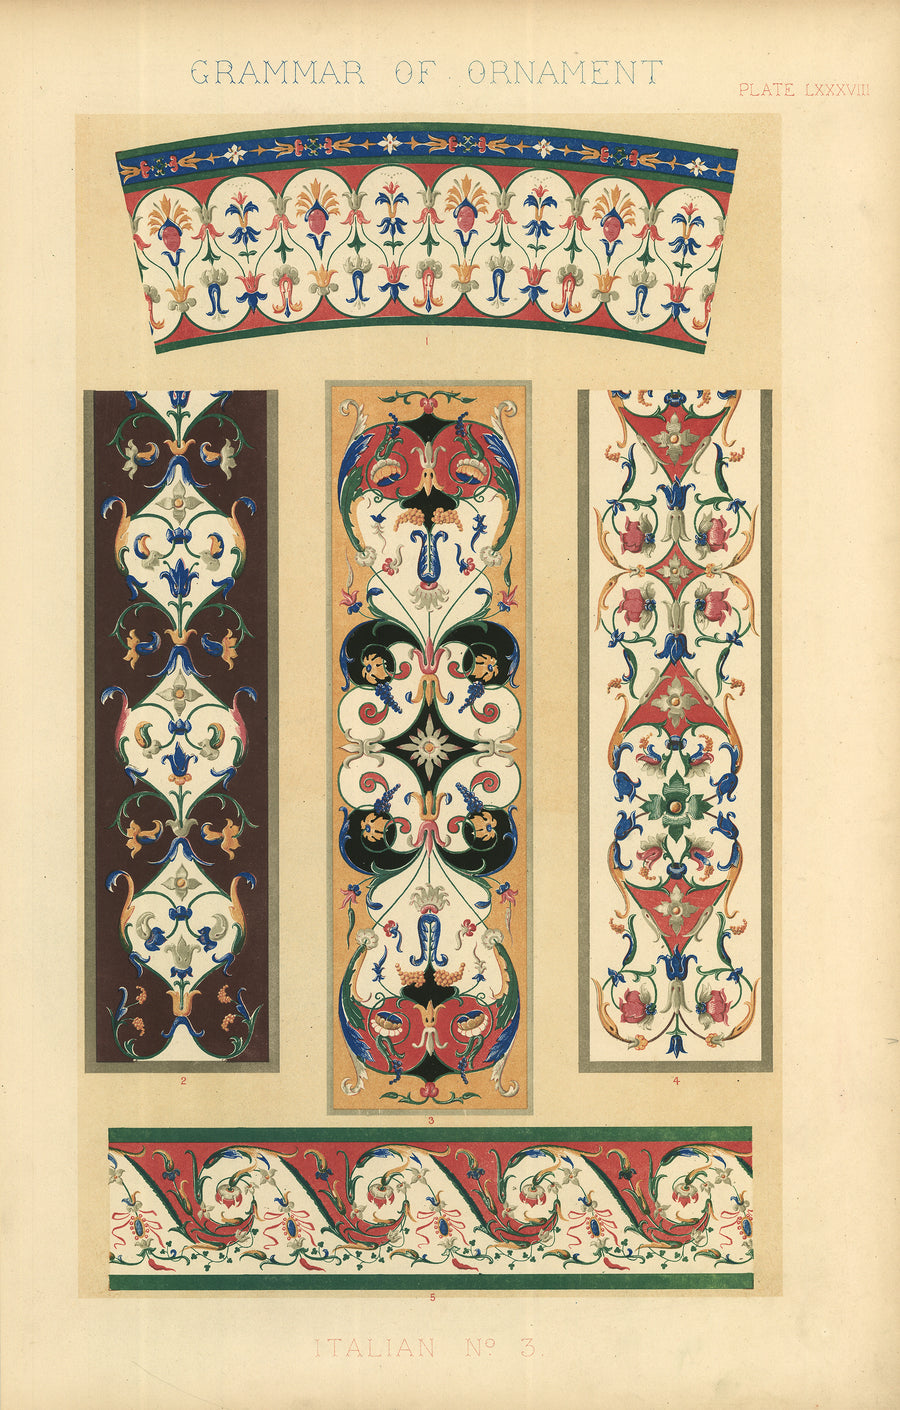  Antique Lithograph Print: Grammar of Ornament by Owen Jones, 1st edition 1856 - Italian No.3, Plate LXXXVIII